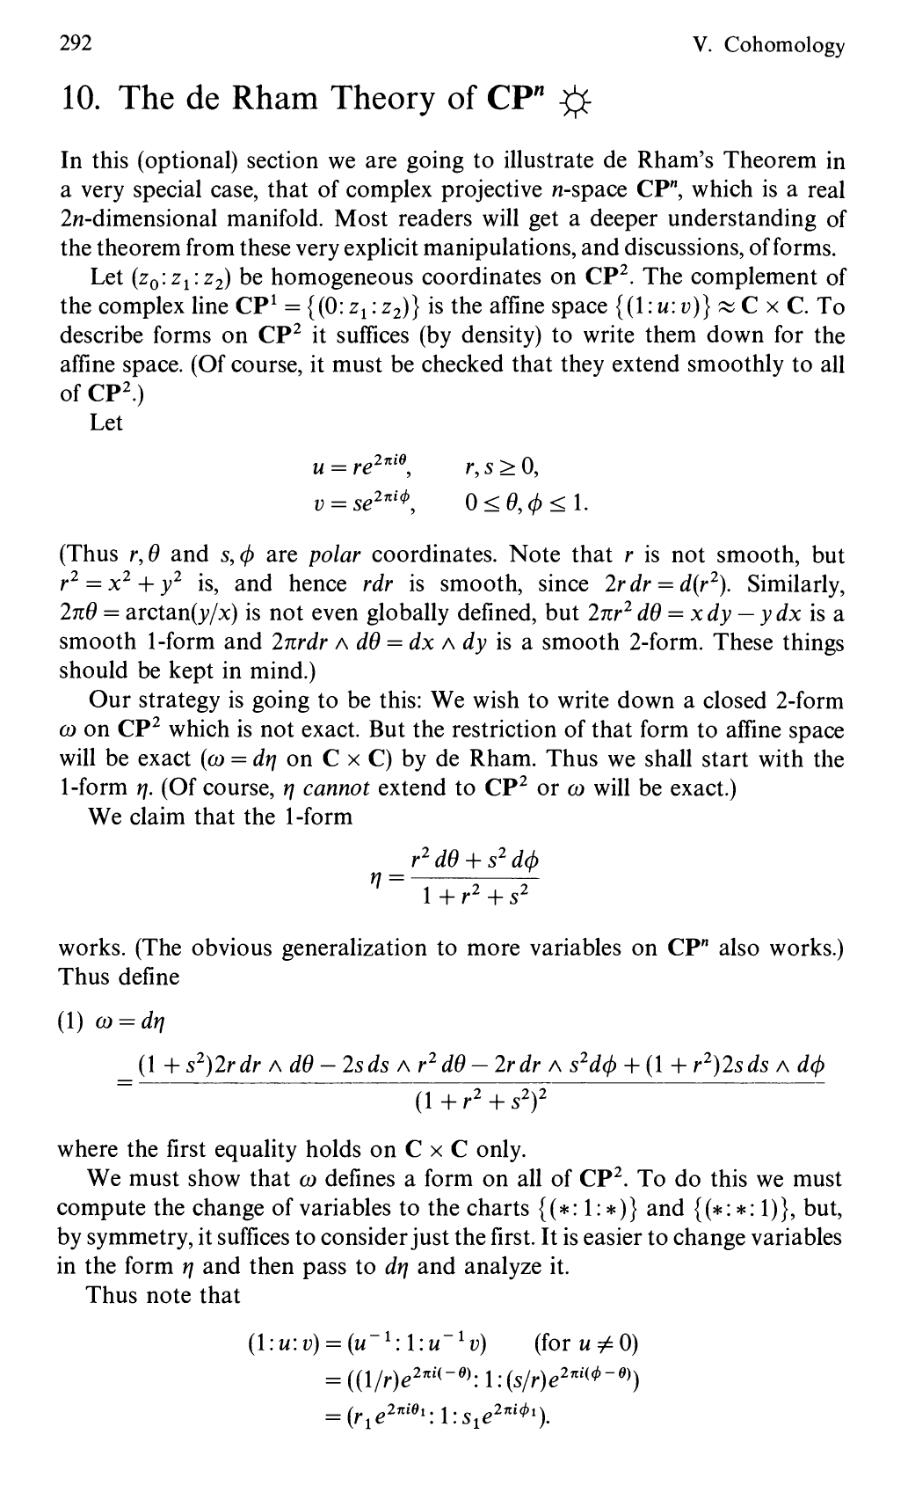 10. The de Rham Theory of CPⁿ